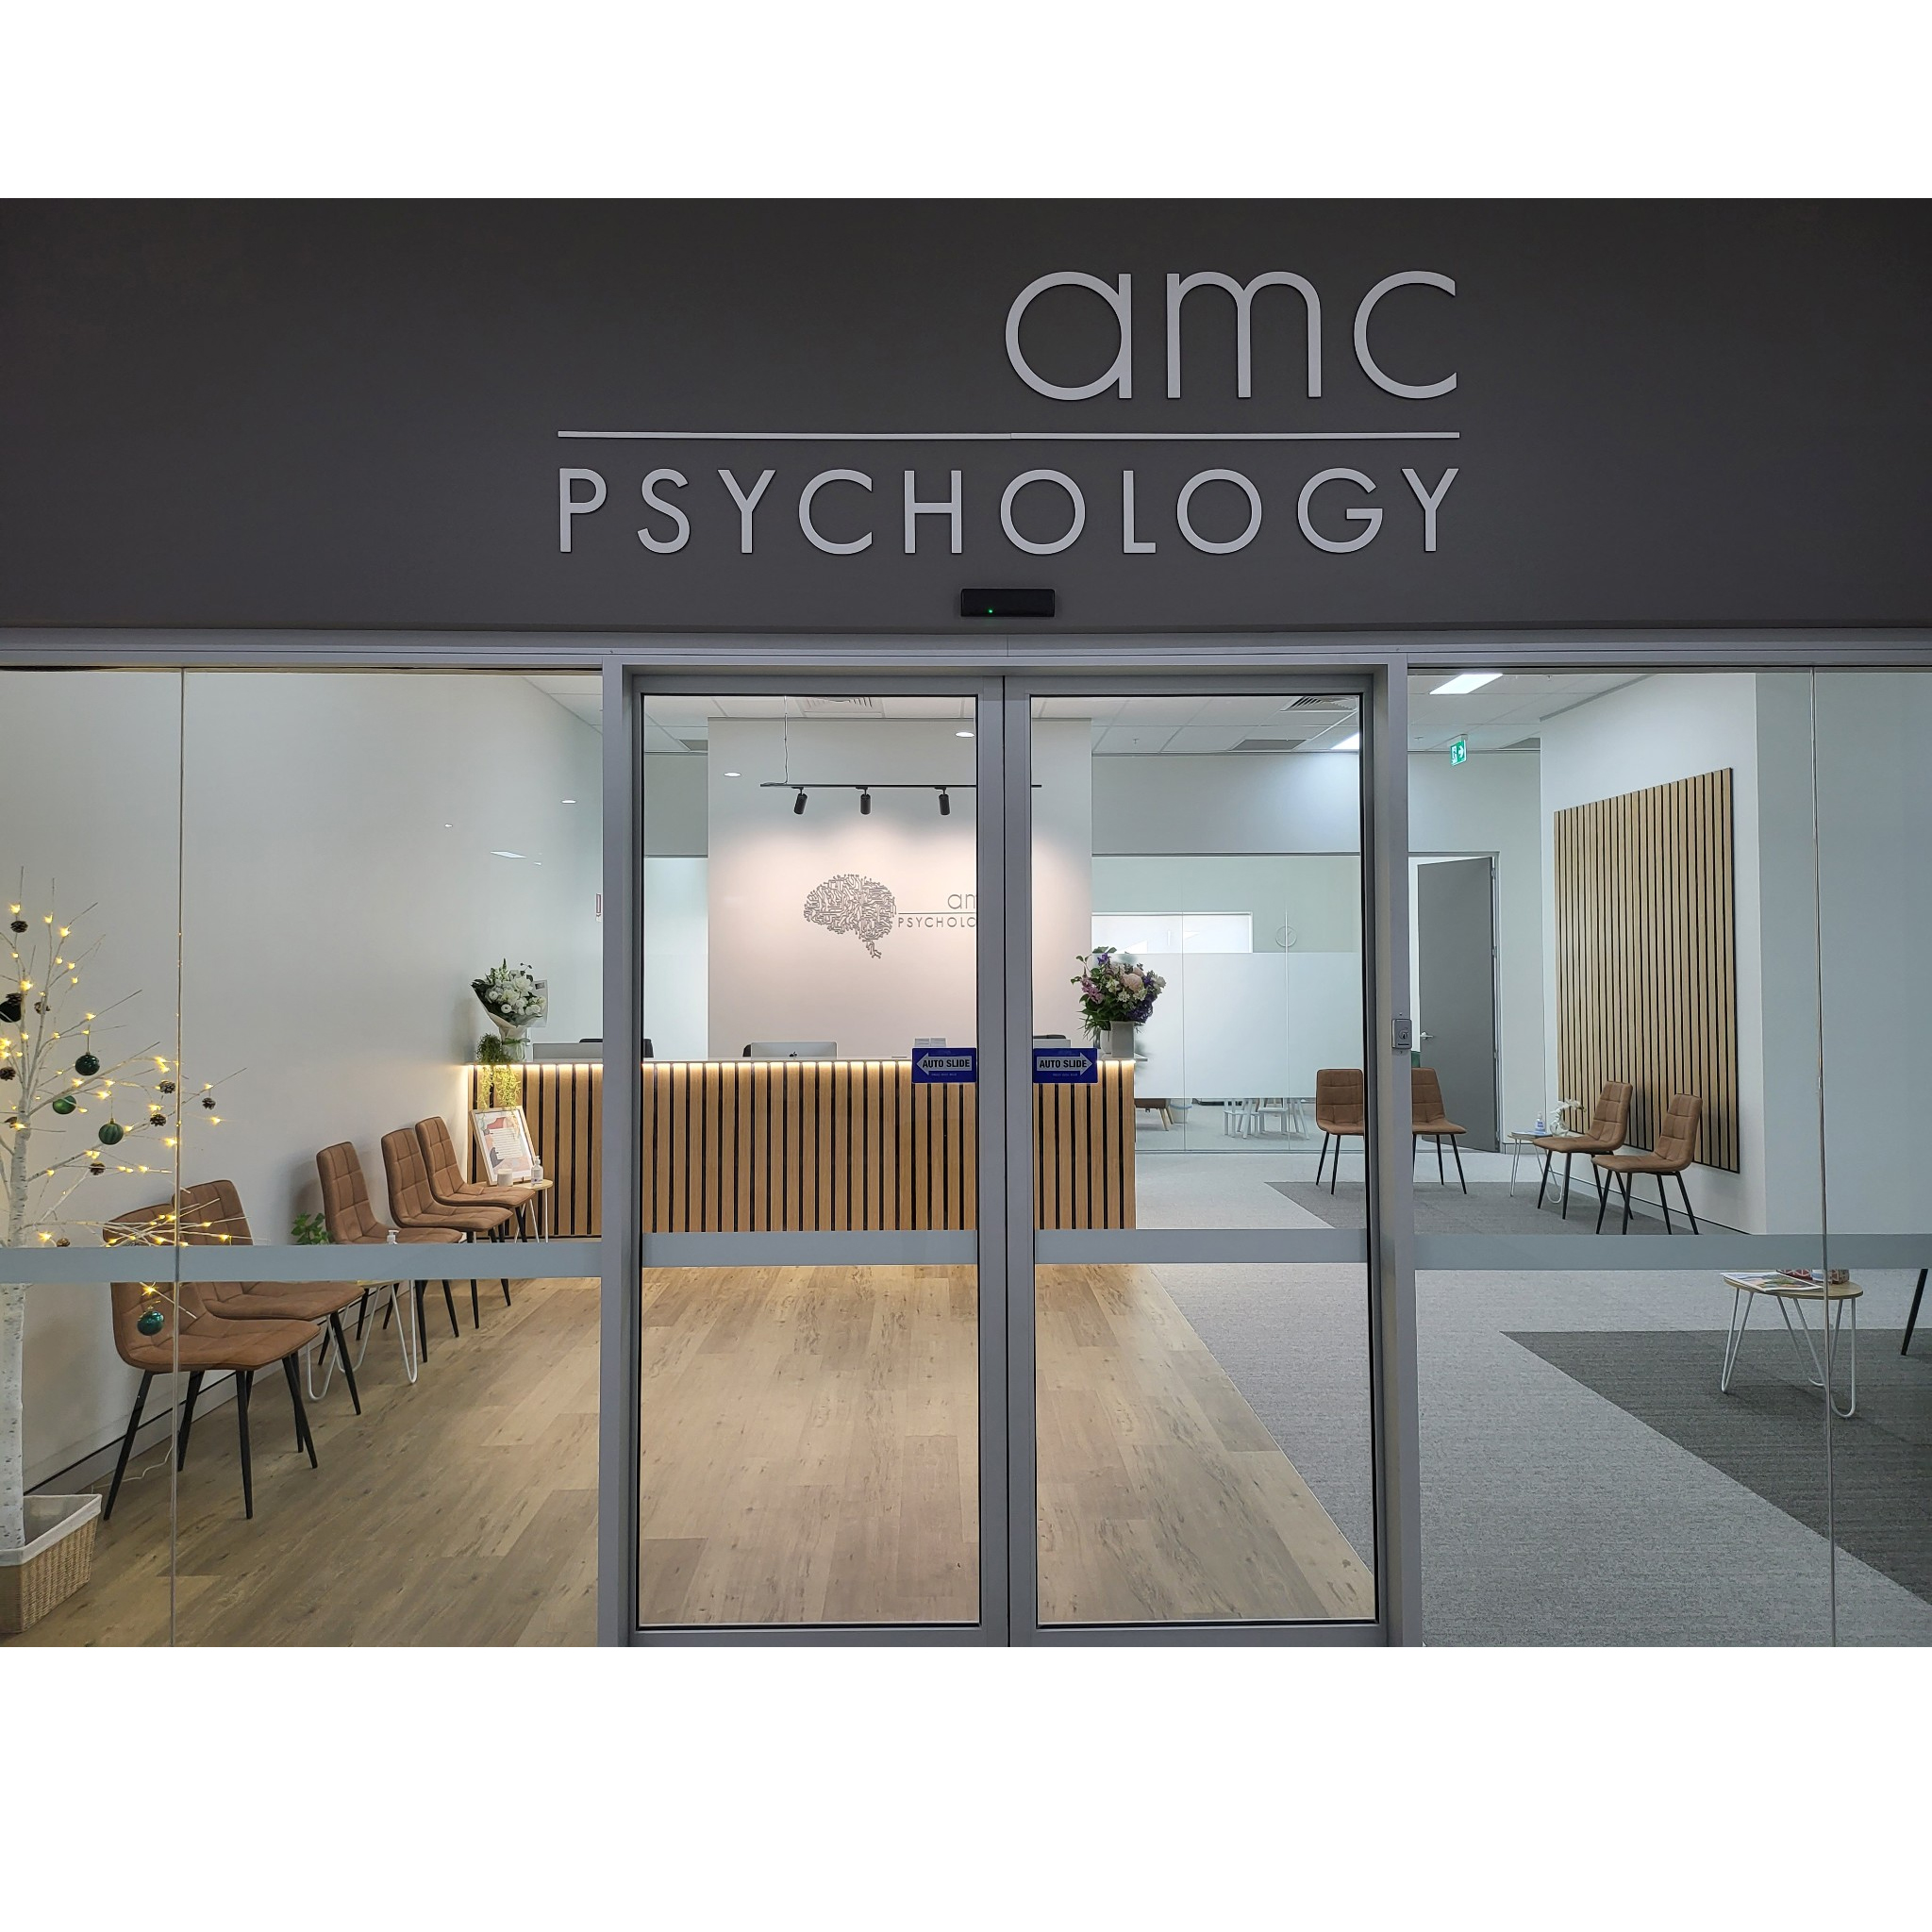 AMC Psychology store